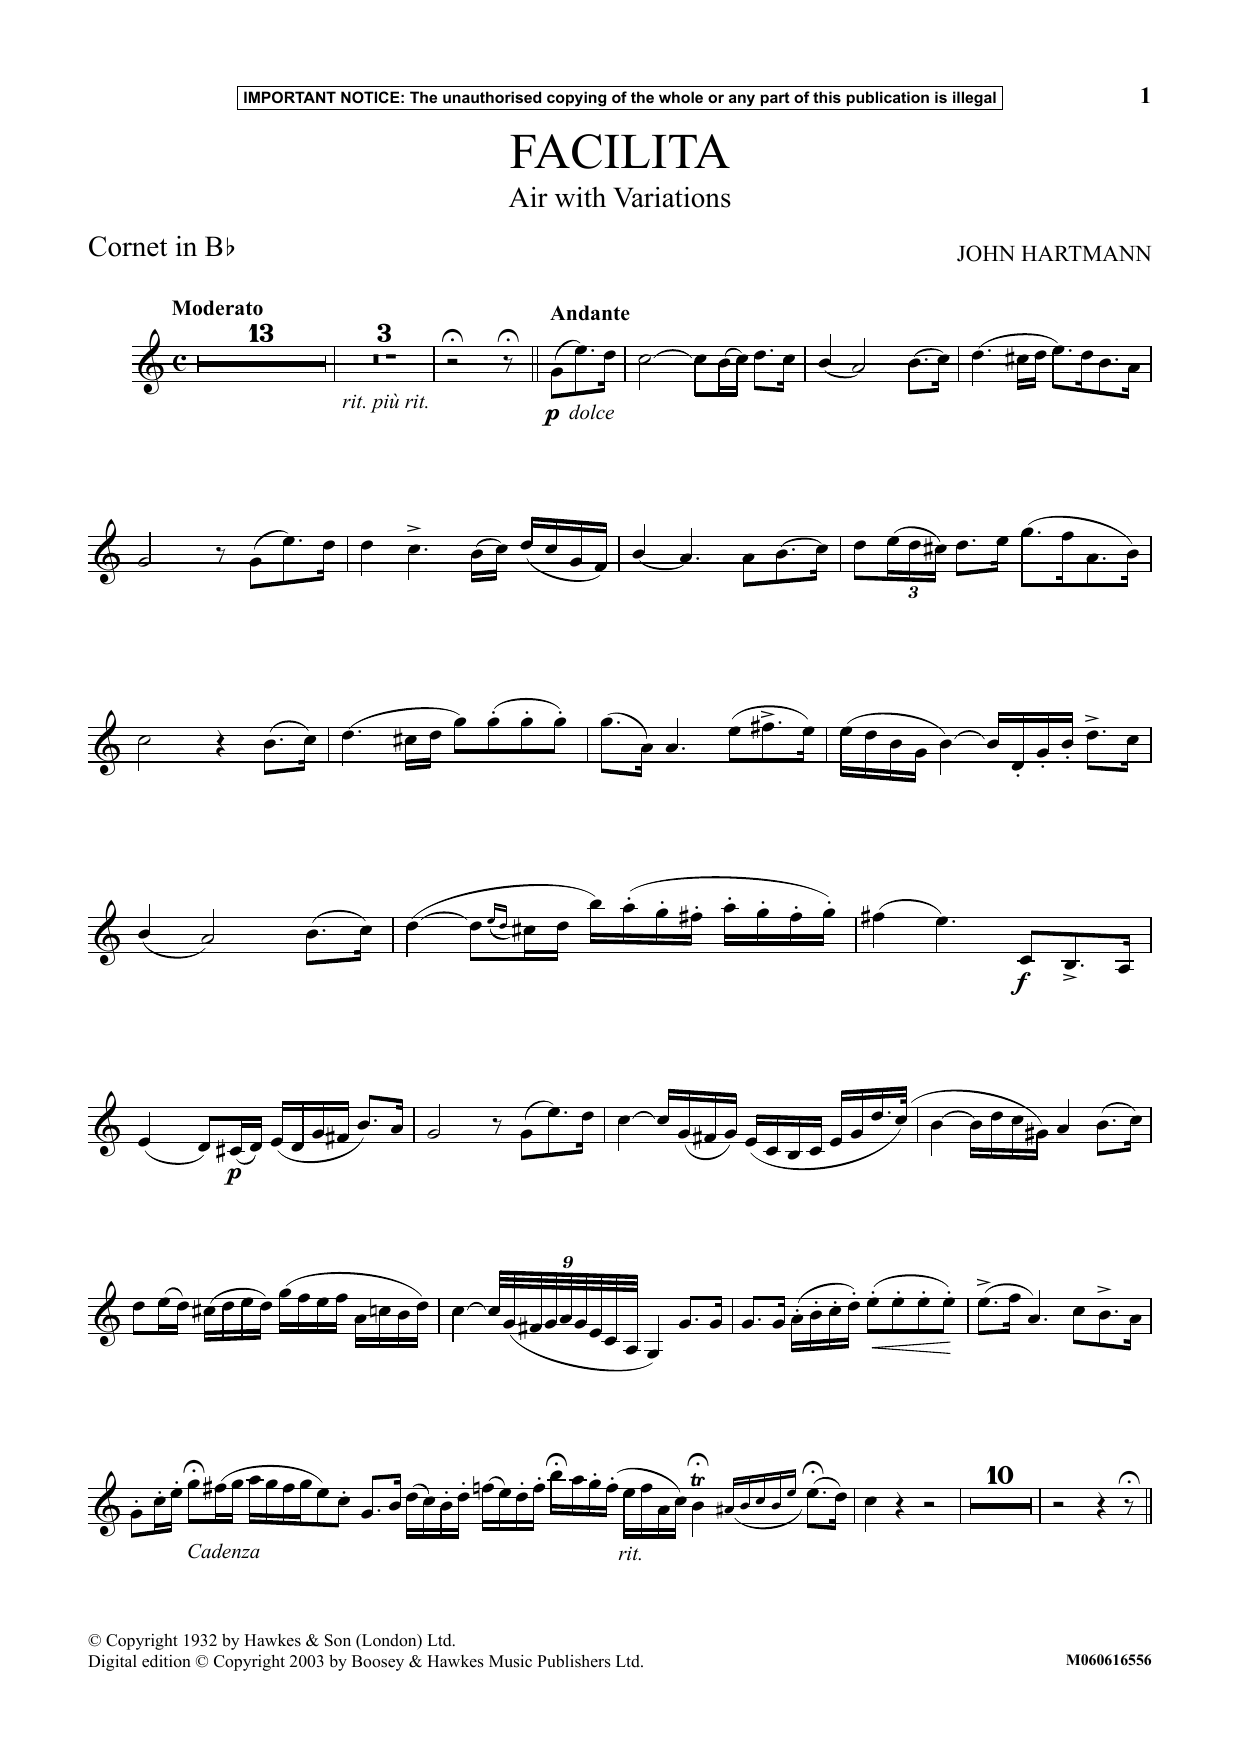 John Hartmann Facilita (Air With Variations) Sheet Music Notes & Chords for Instrumental Solo - Download or Print PDF